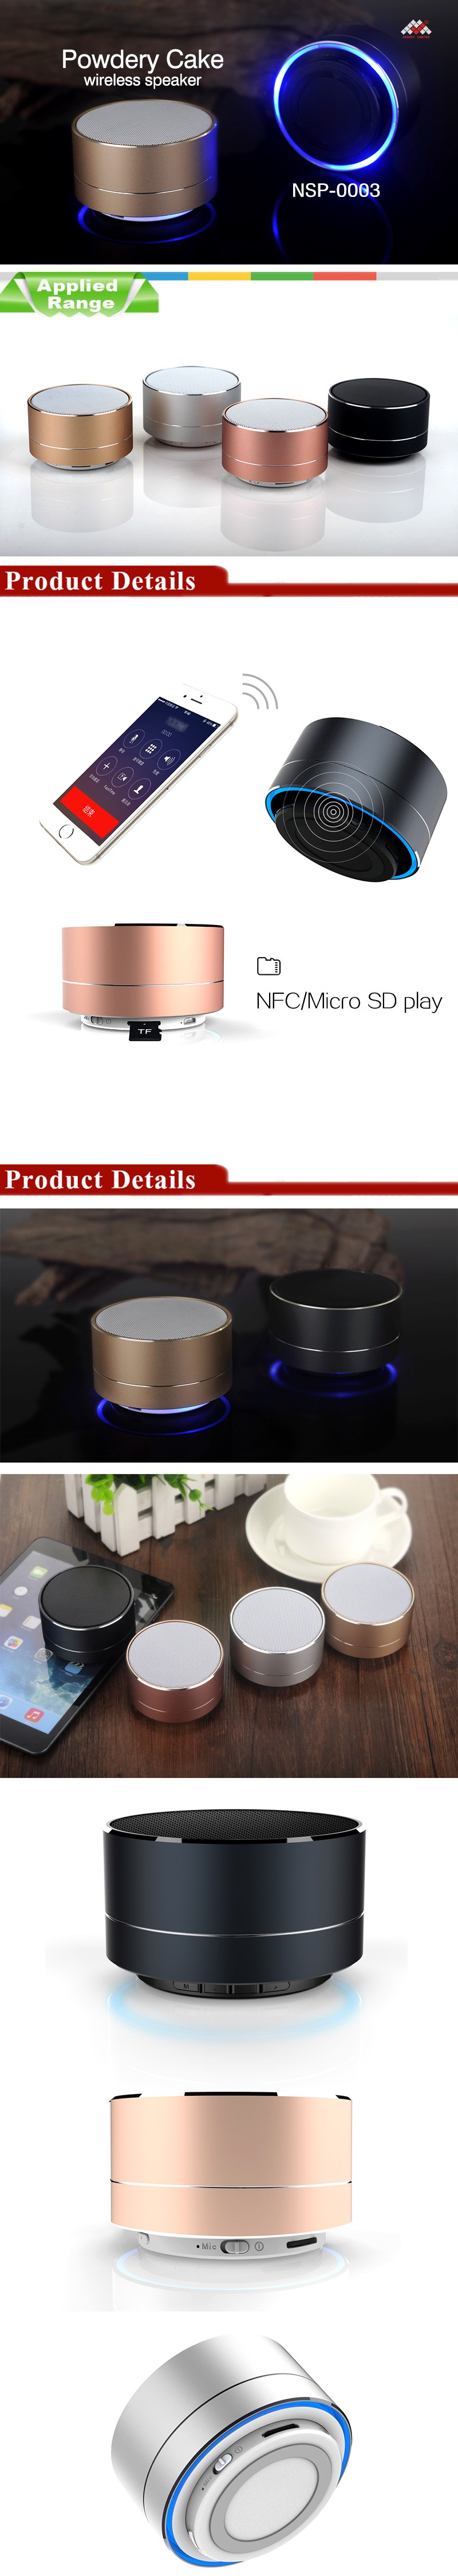 Mini Bluetooth Speaker Manufacturers